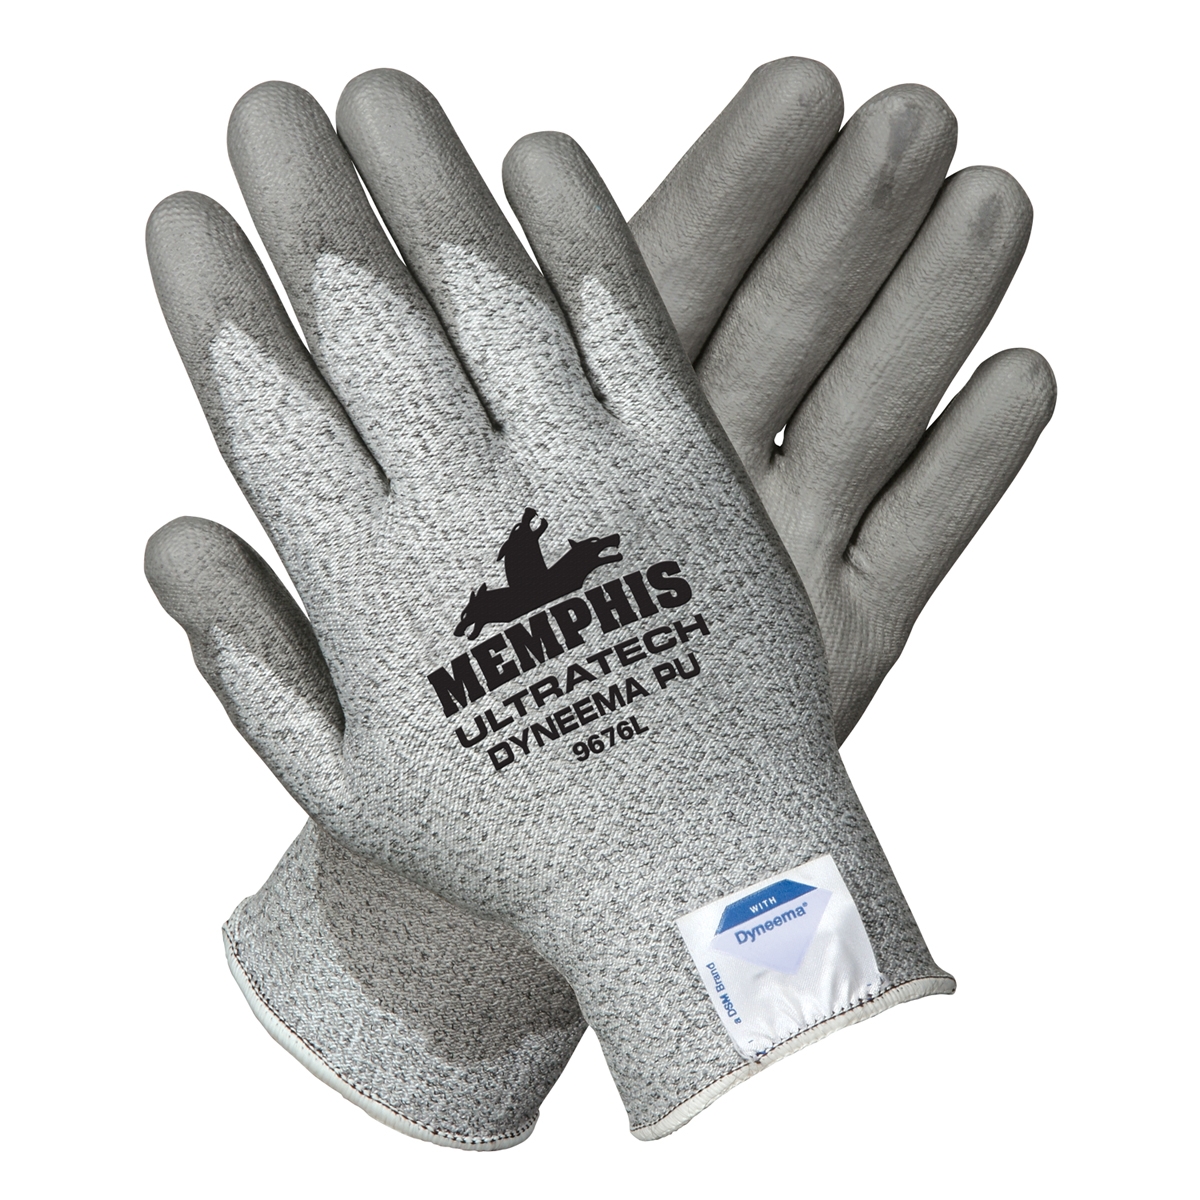 Ultratech Dyneema Cut Resistant Safety Glove, Cut Level A3 - 9676